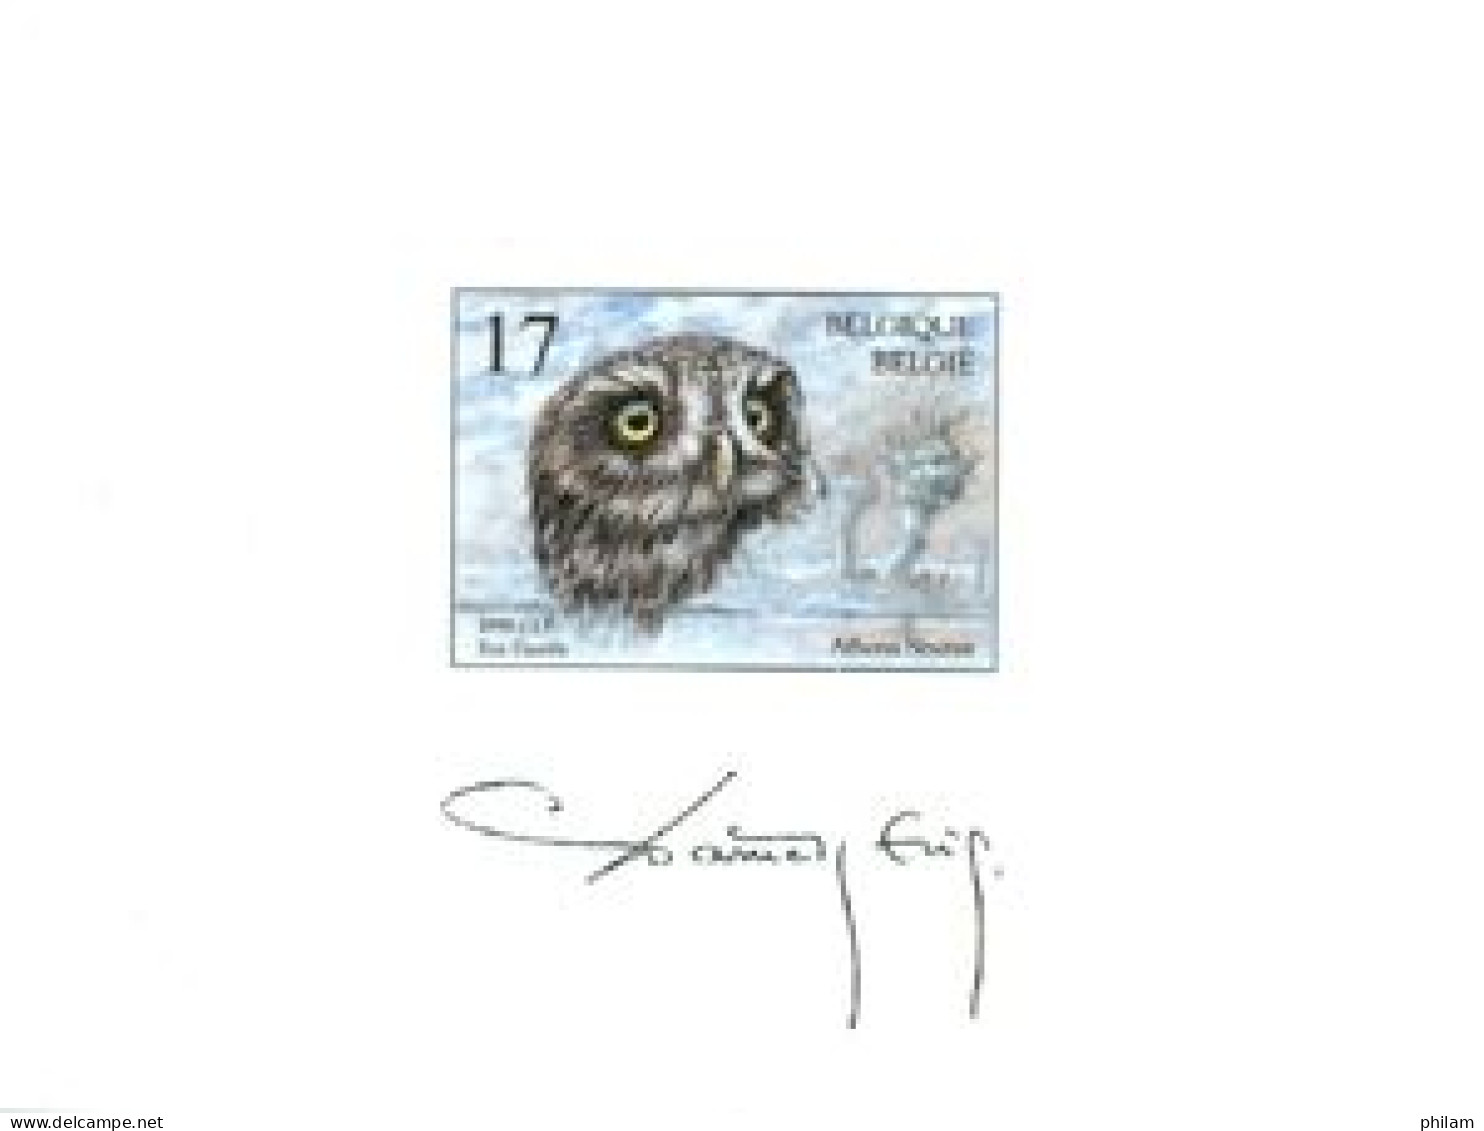 BELGIQUE 1999 - NA 6 - FR - Hibou - Uil - Owl - Texte En Français/Franse Text - Abgelehnte Entwürfe [NA]